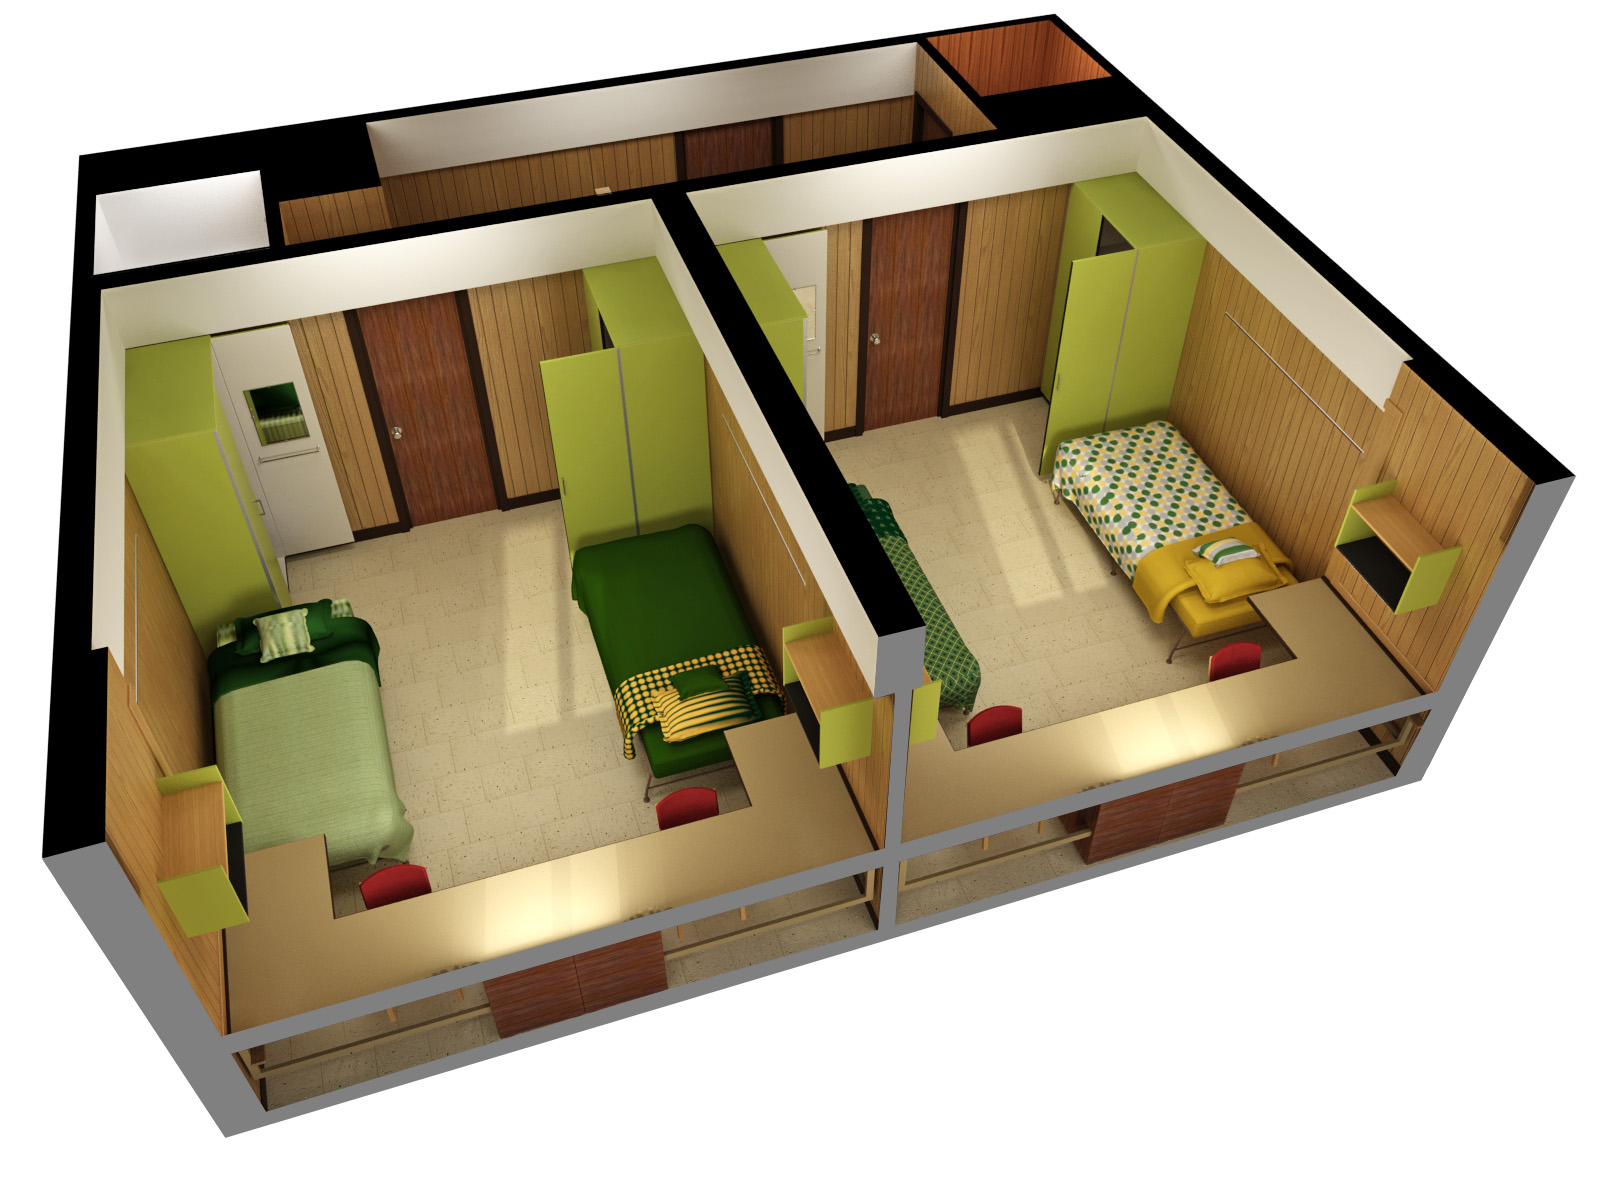 Sample Dorm Room Floor Plans